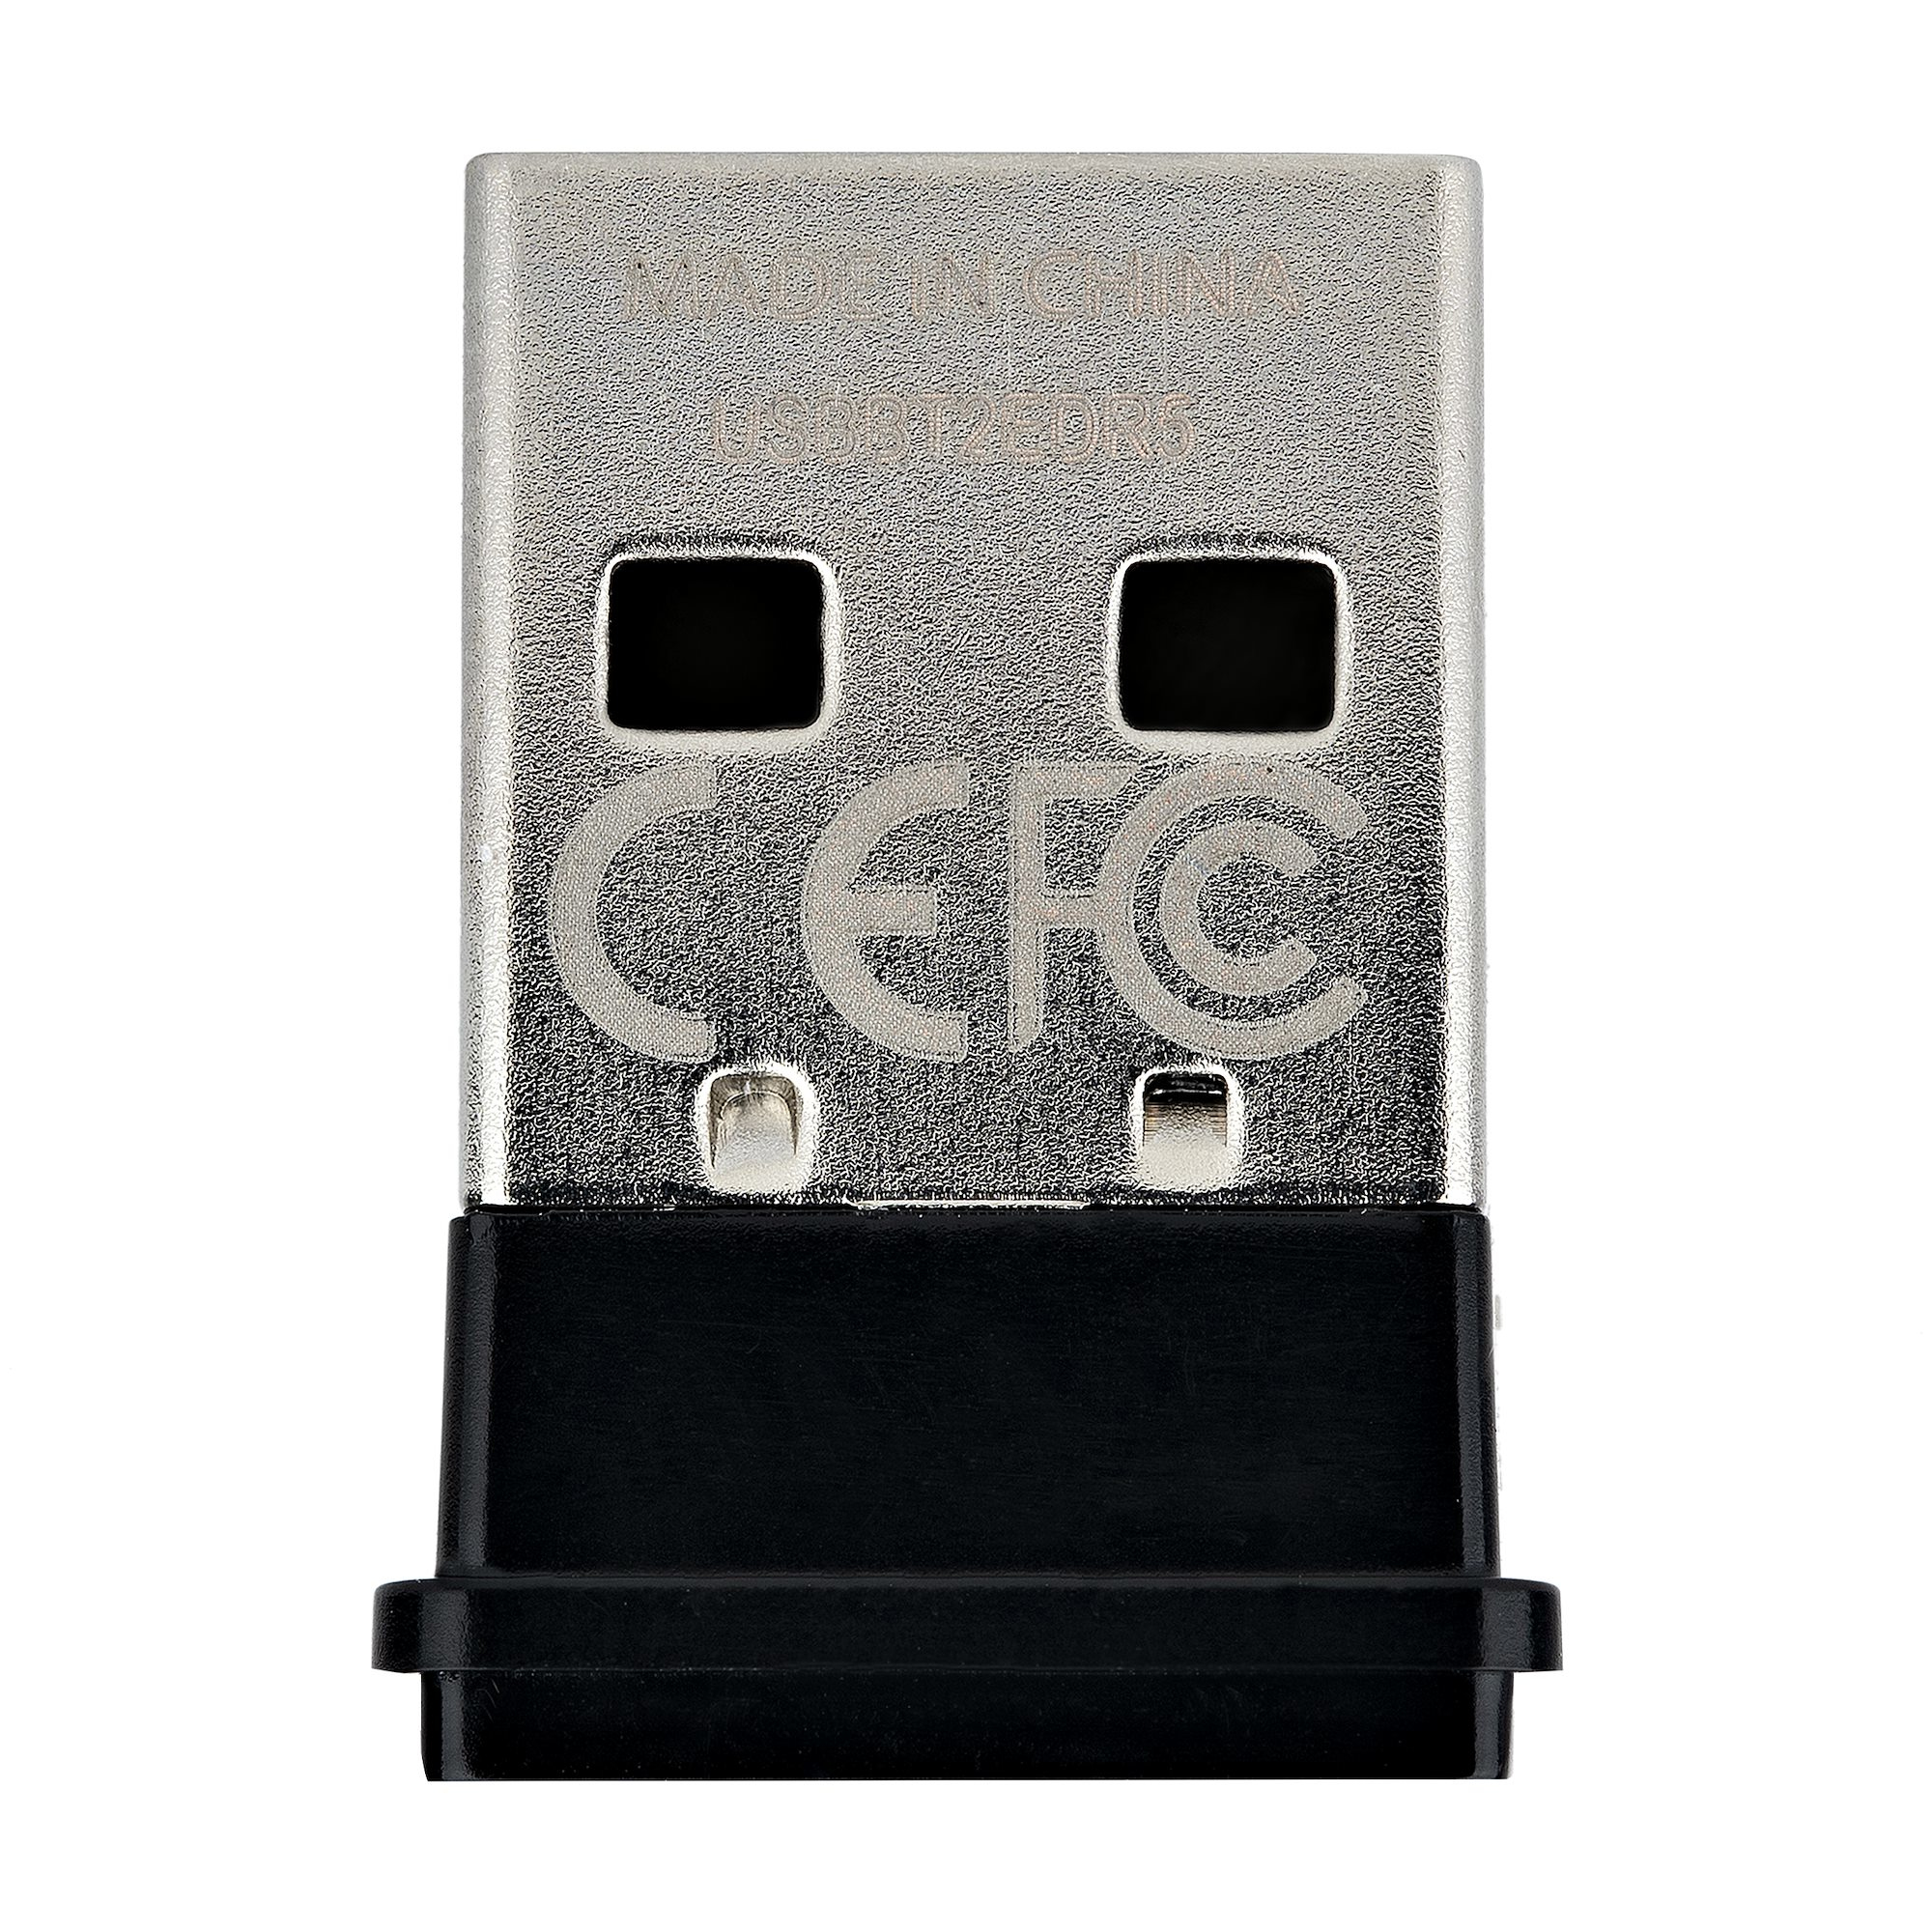 StarTech.com Adaptateur USB Bluetooth 5.0 - Clé Bluetooth pour PC